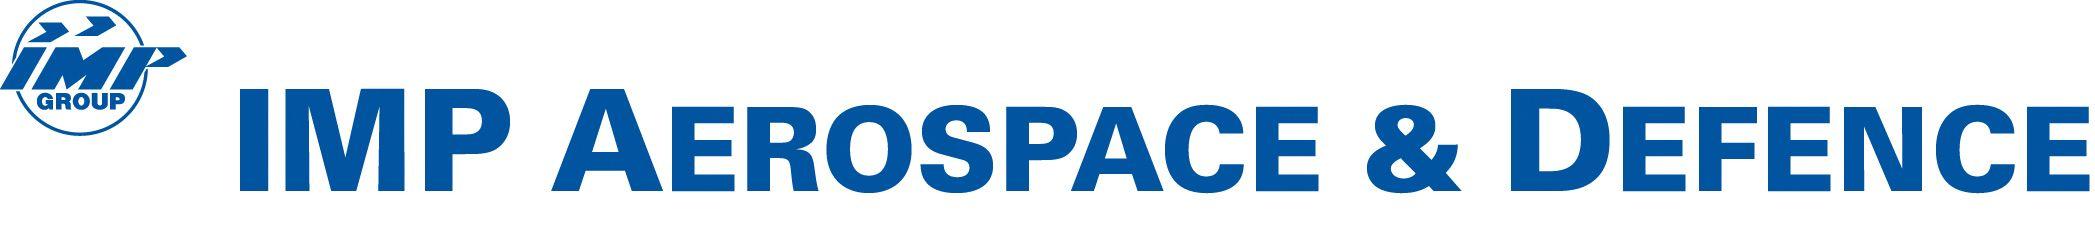 Aerospace and Defense Company Logo - IMP Aerospace and Defence Industries Association